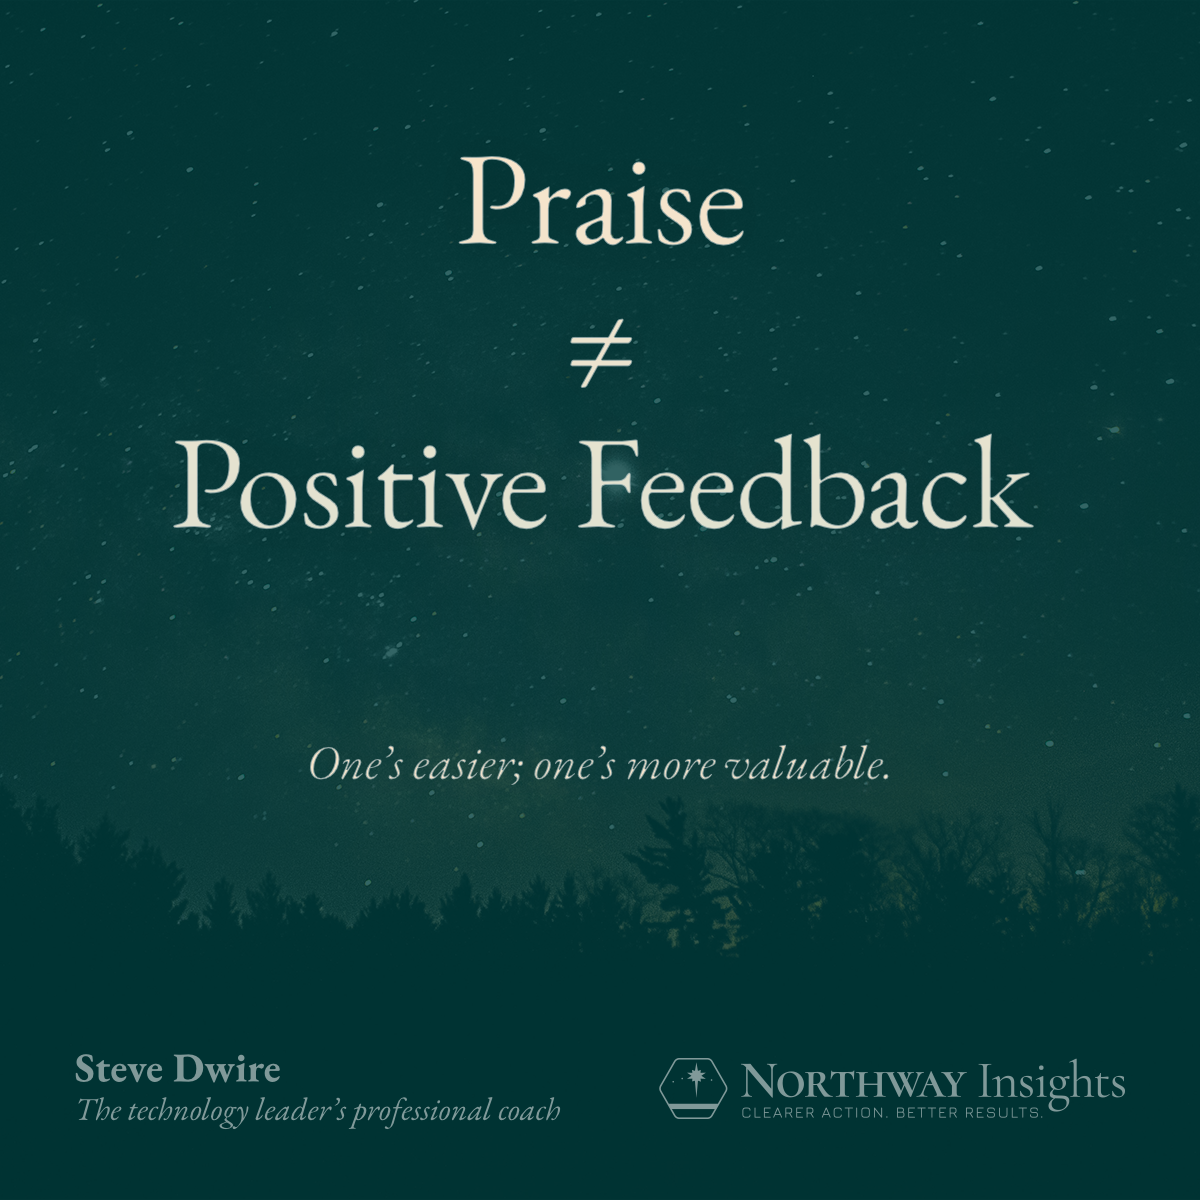 Praise ≠ Positive Feedback